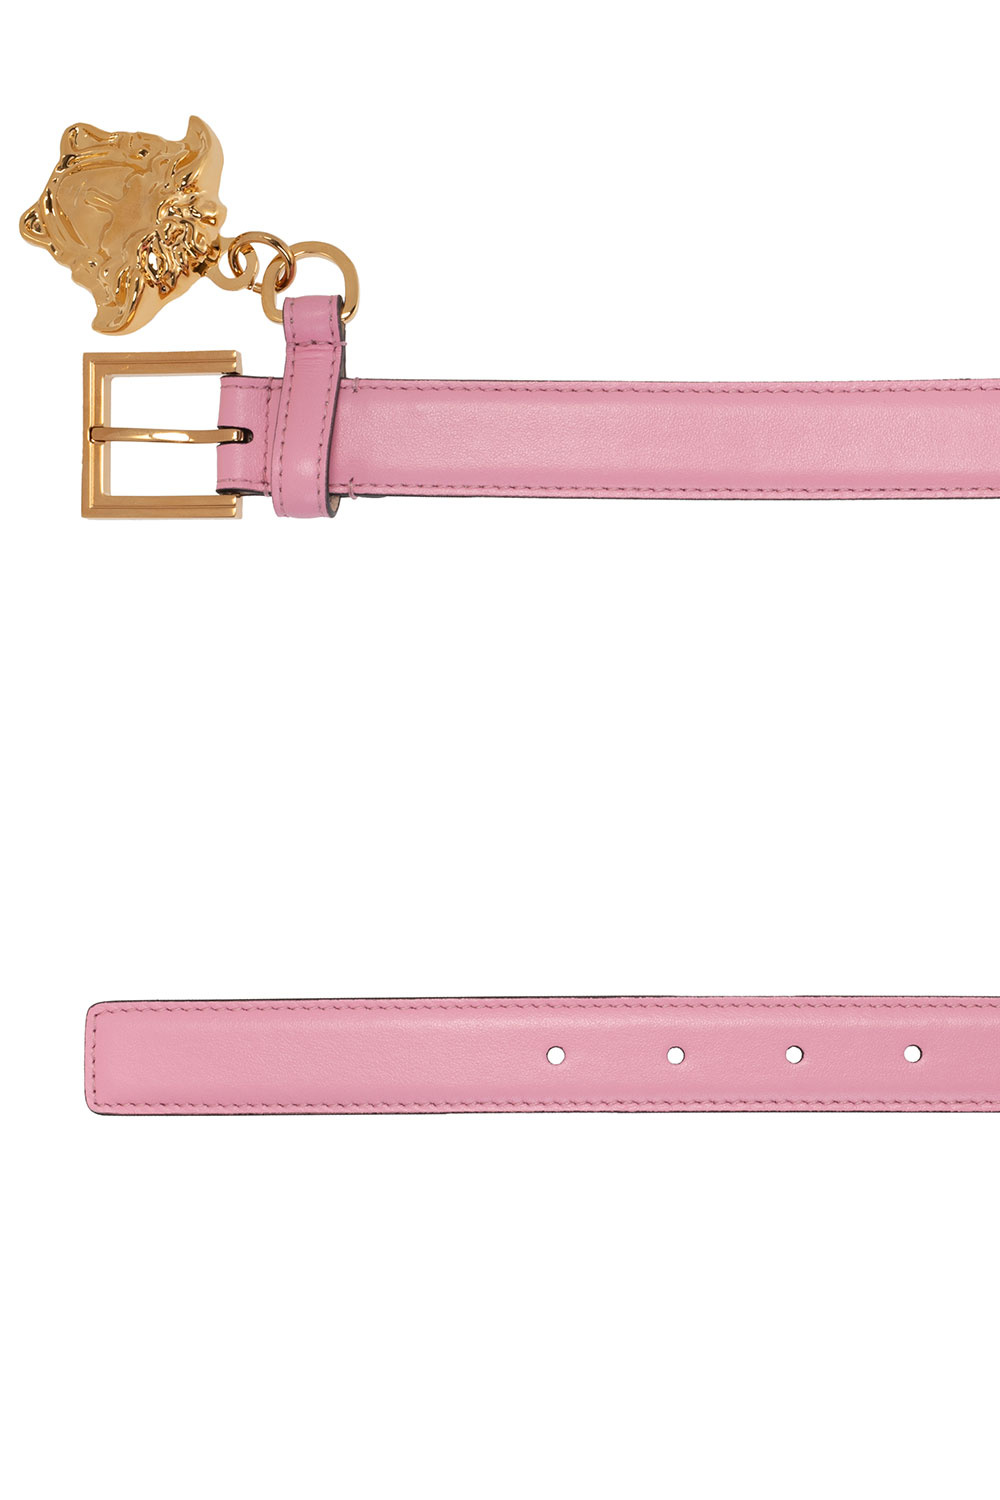 Versace Skinny Buckle - Pink Belts, Accessories - VES129422